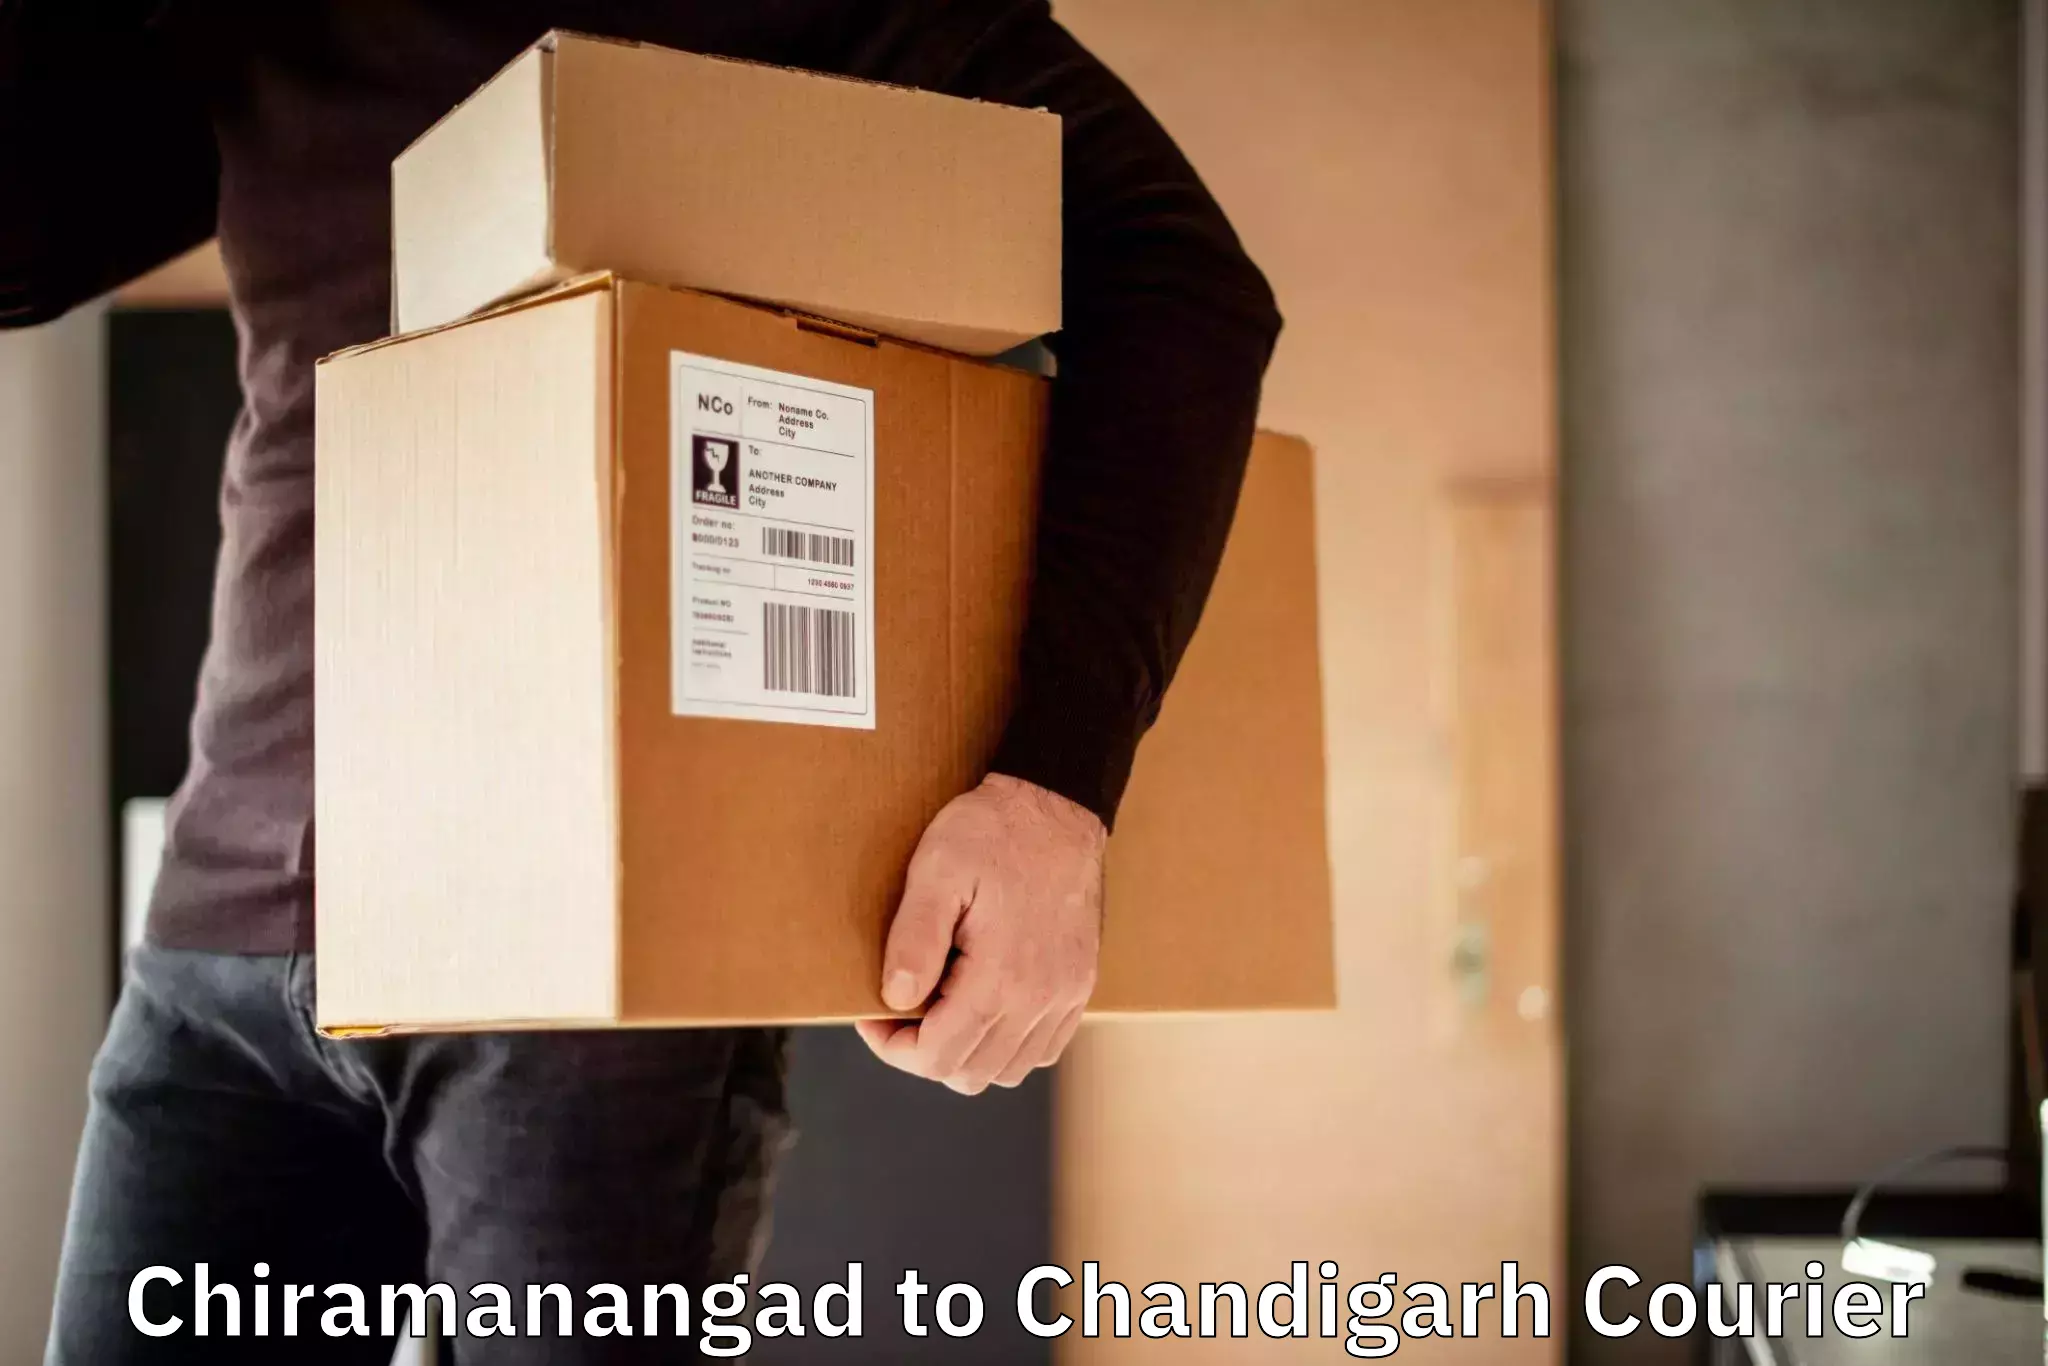 Local delivery service Chiramanangad to Chandigarh